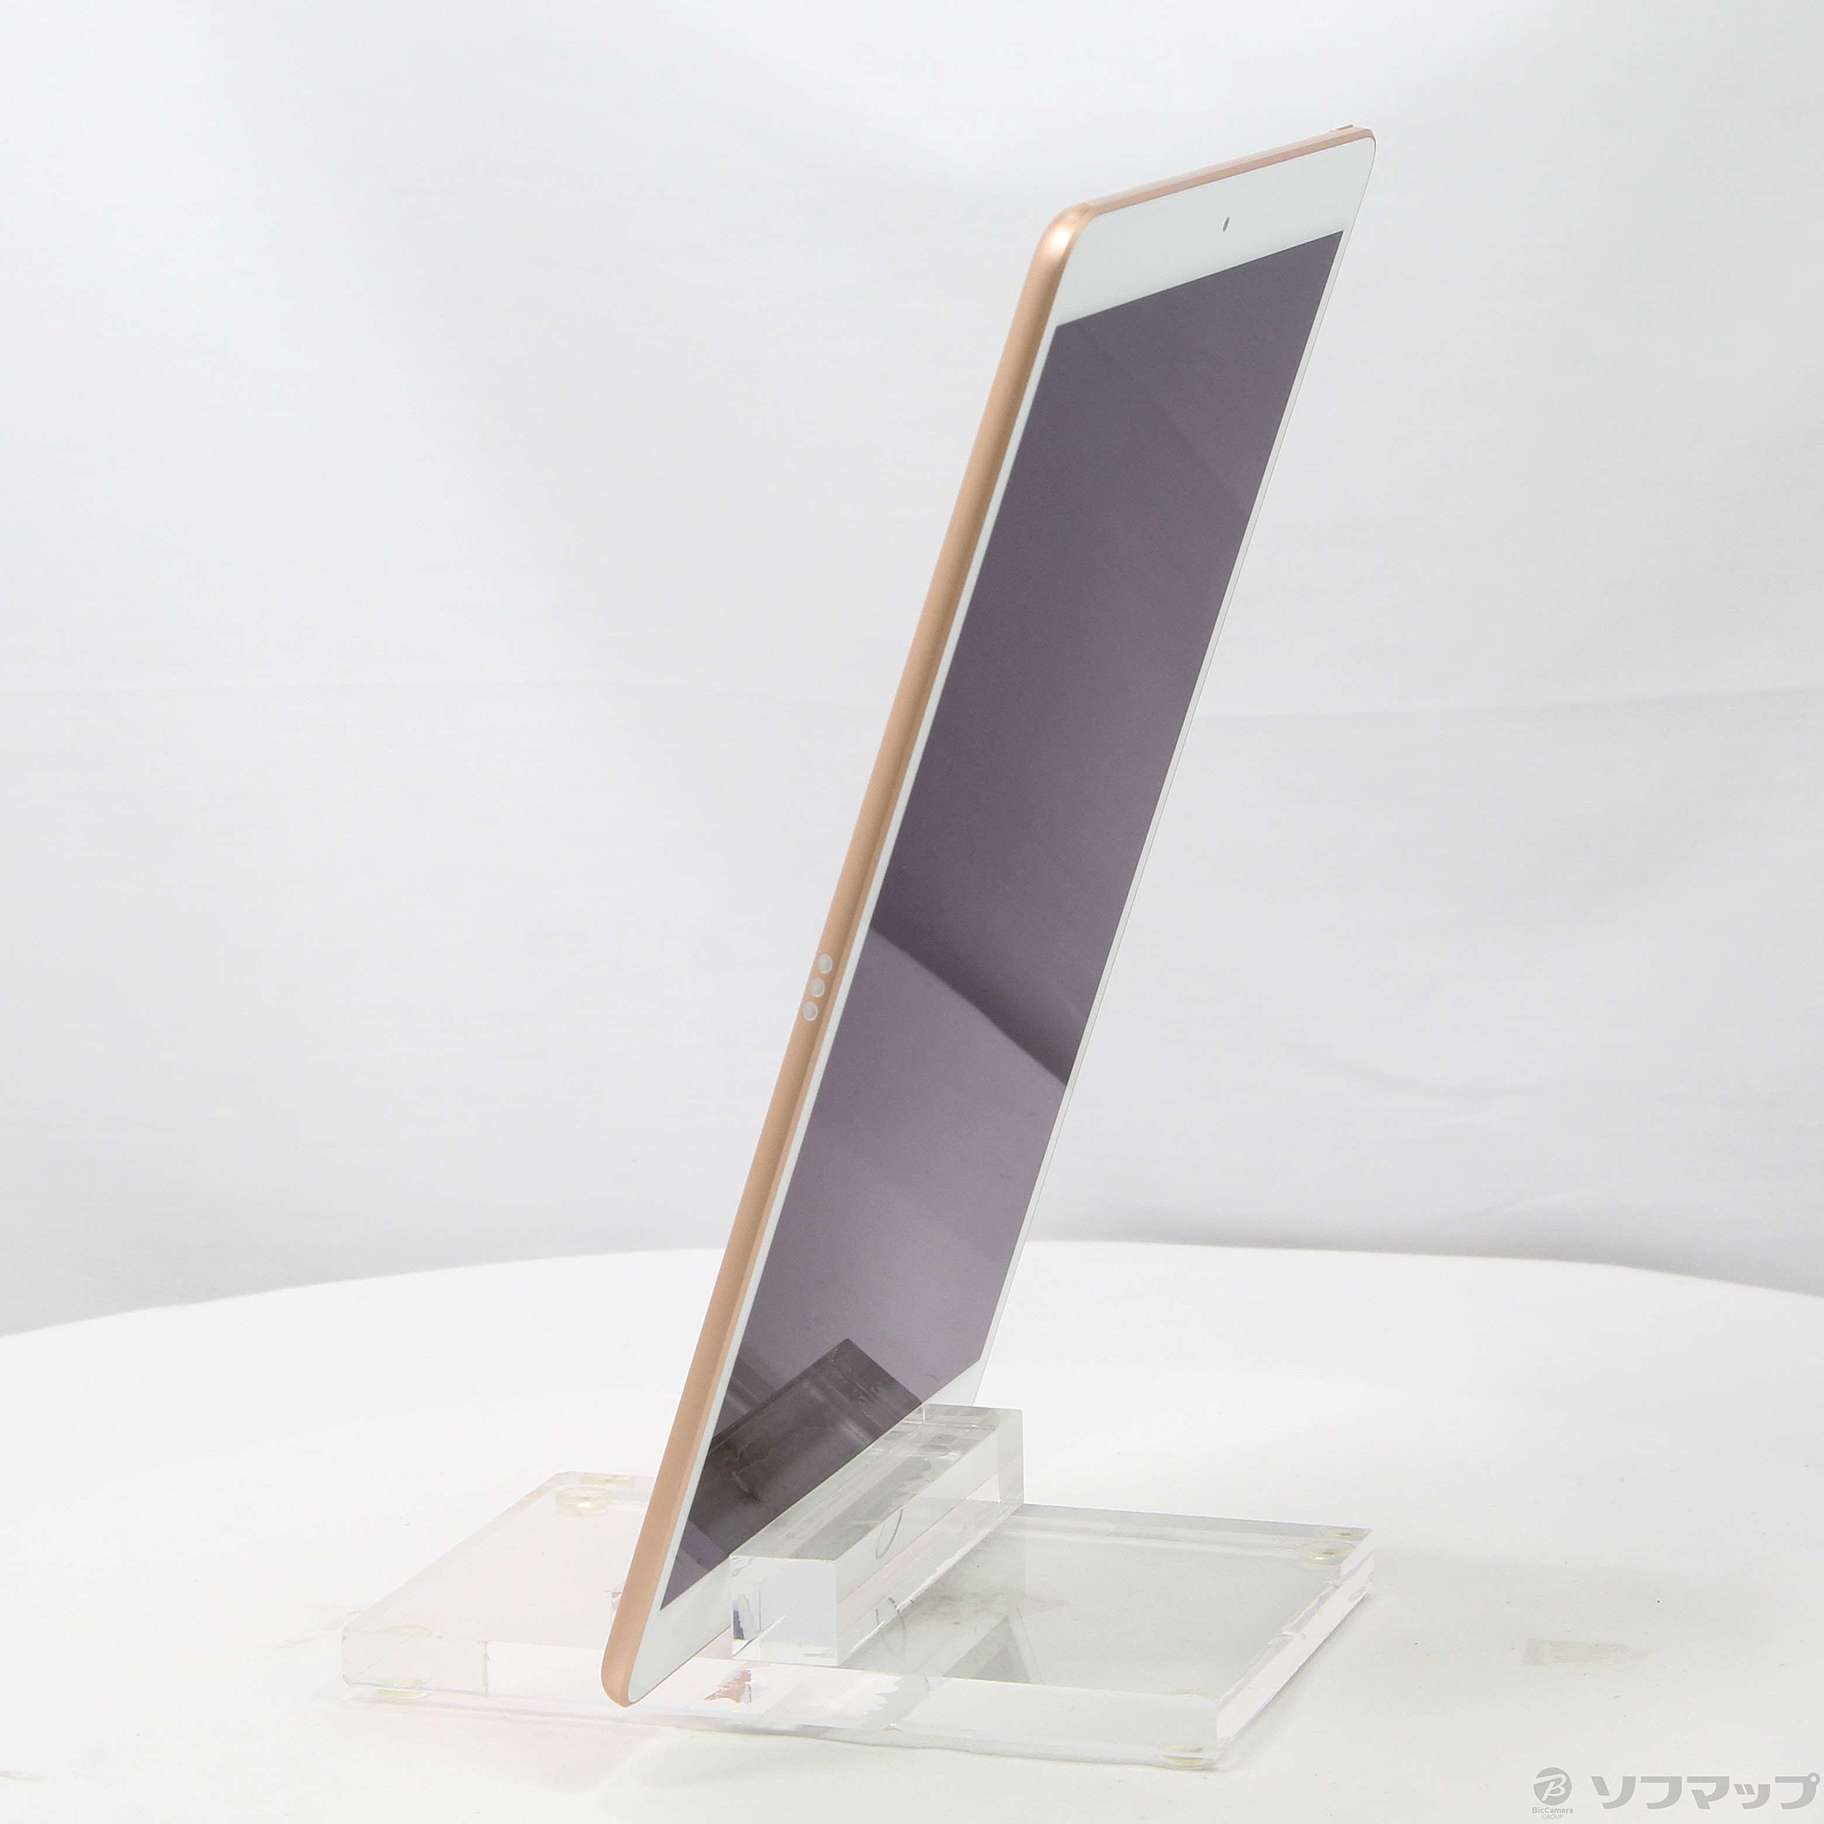 中古】iPad Air 第3世代 64GB ゴールド MUUL2J／A Wi-Fi ...